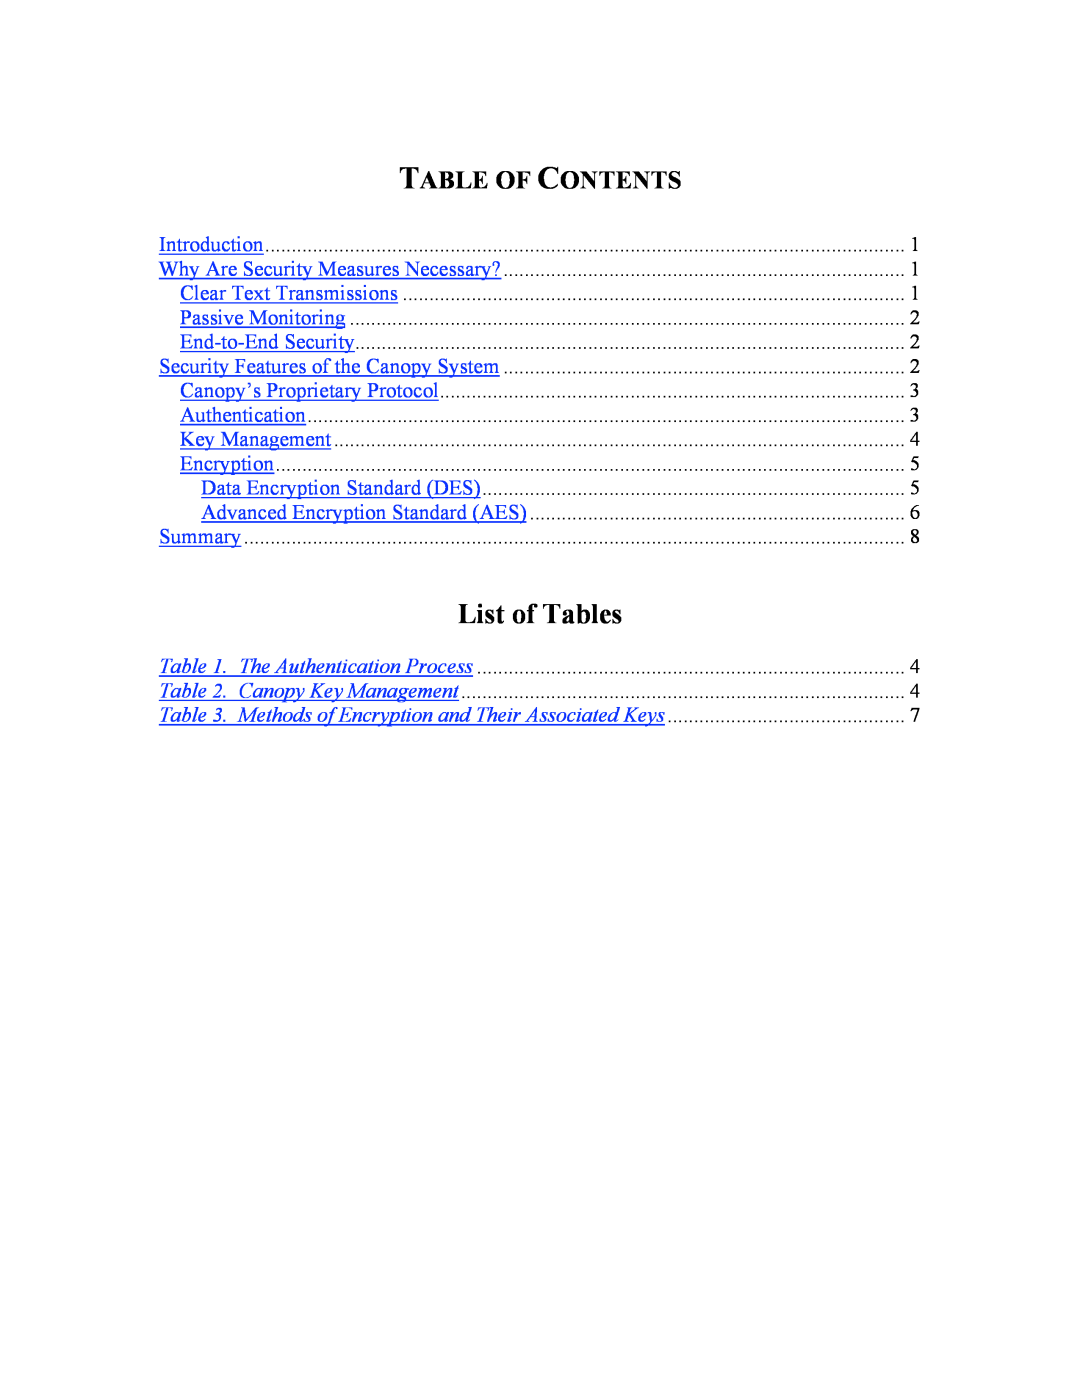 Motorola Wireless Broadband Platform manual List of Tables, Table Of Contents 